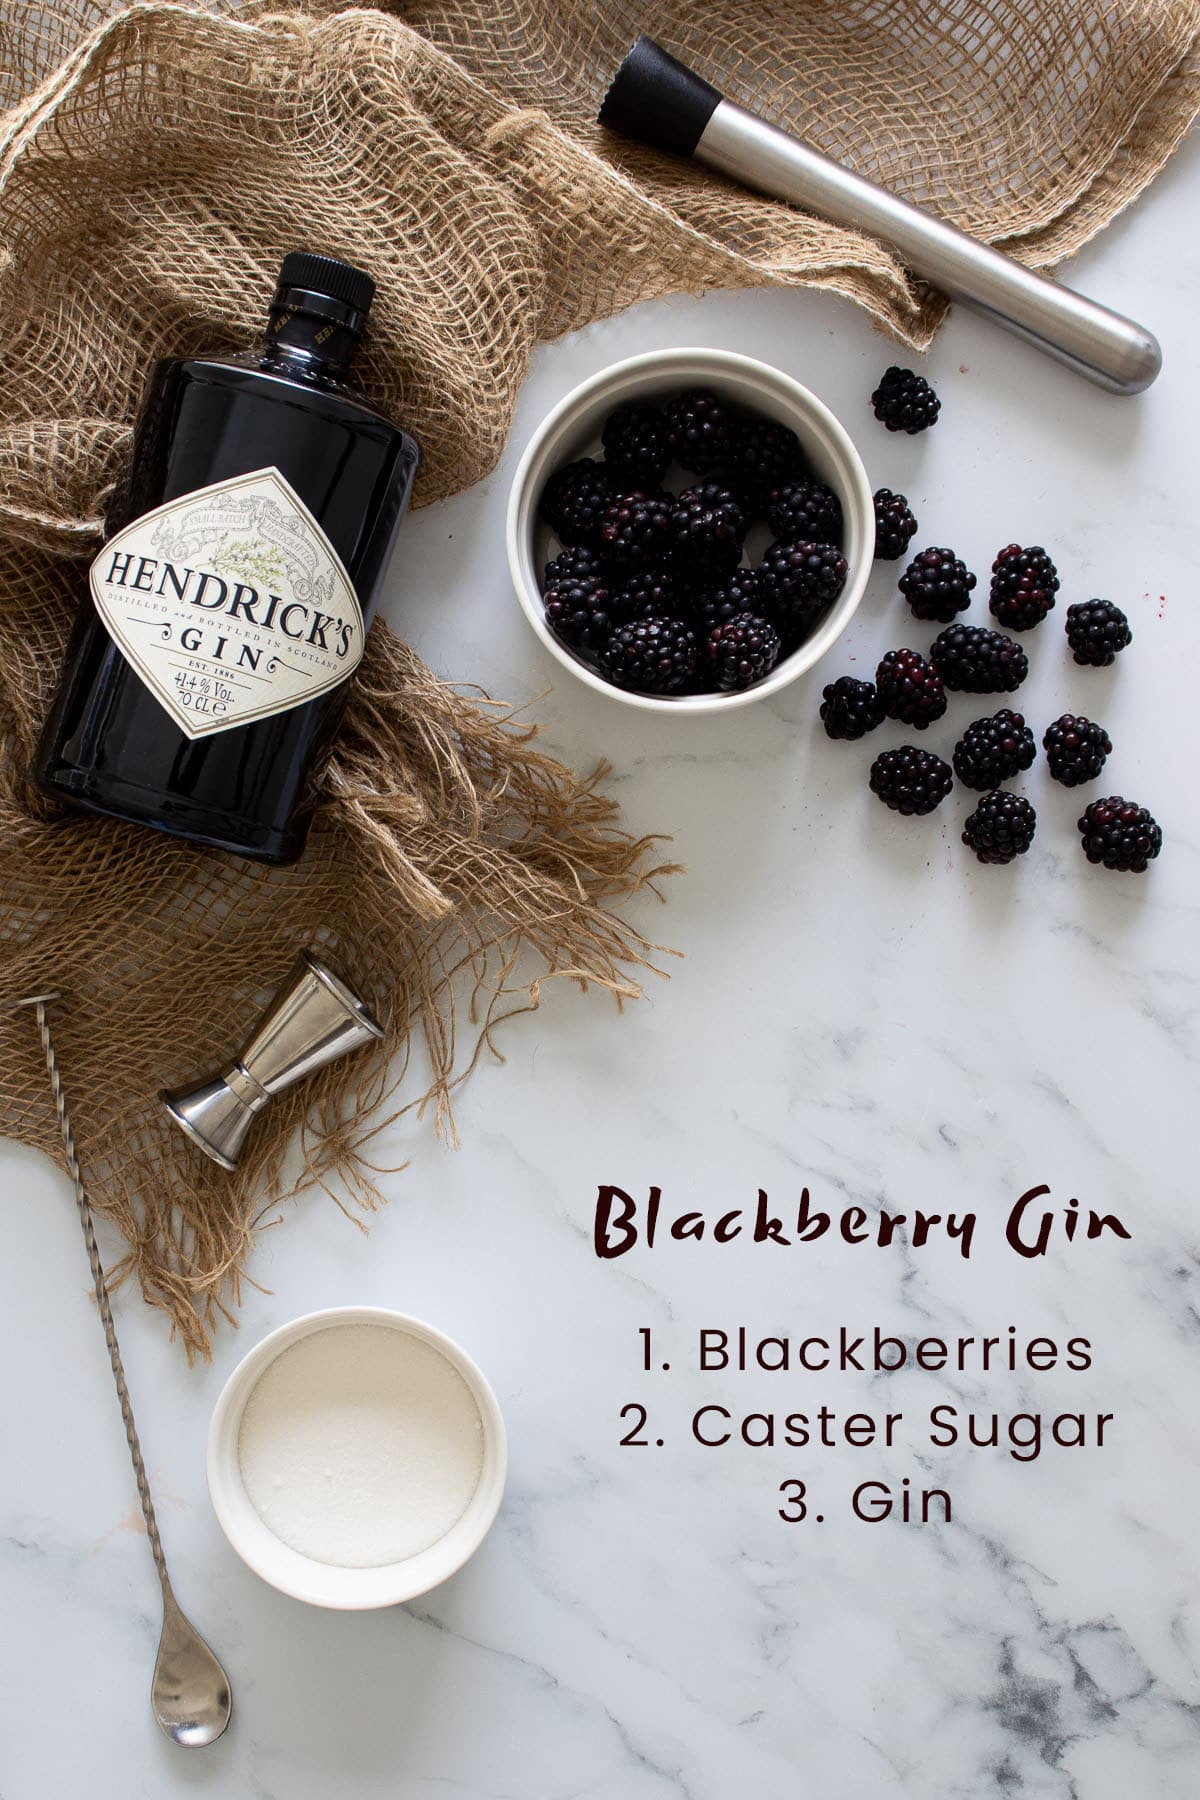 Blackberry gin ingredients